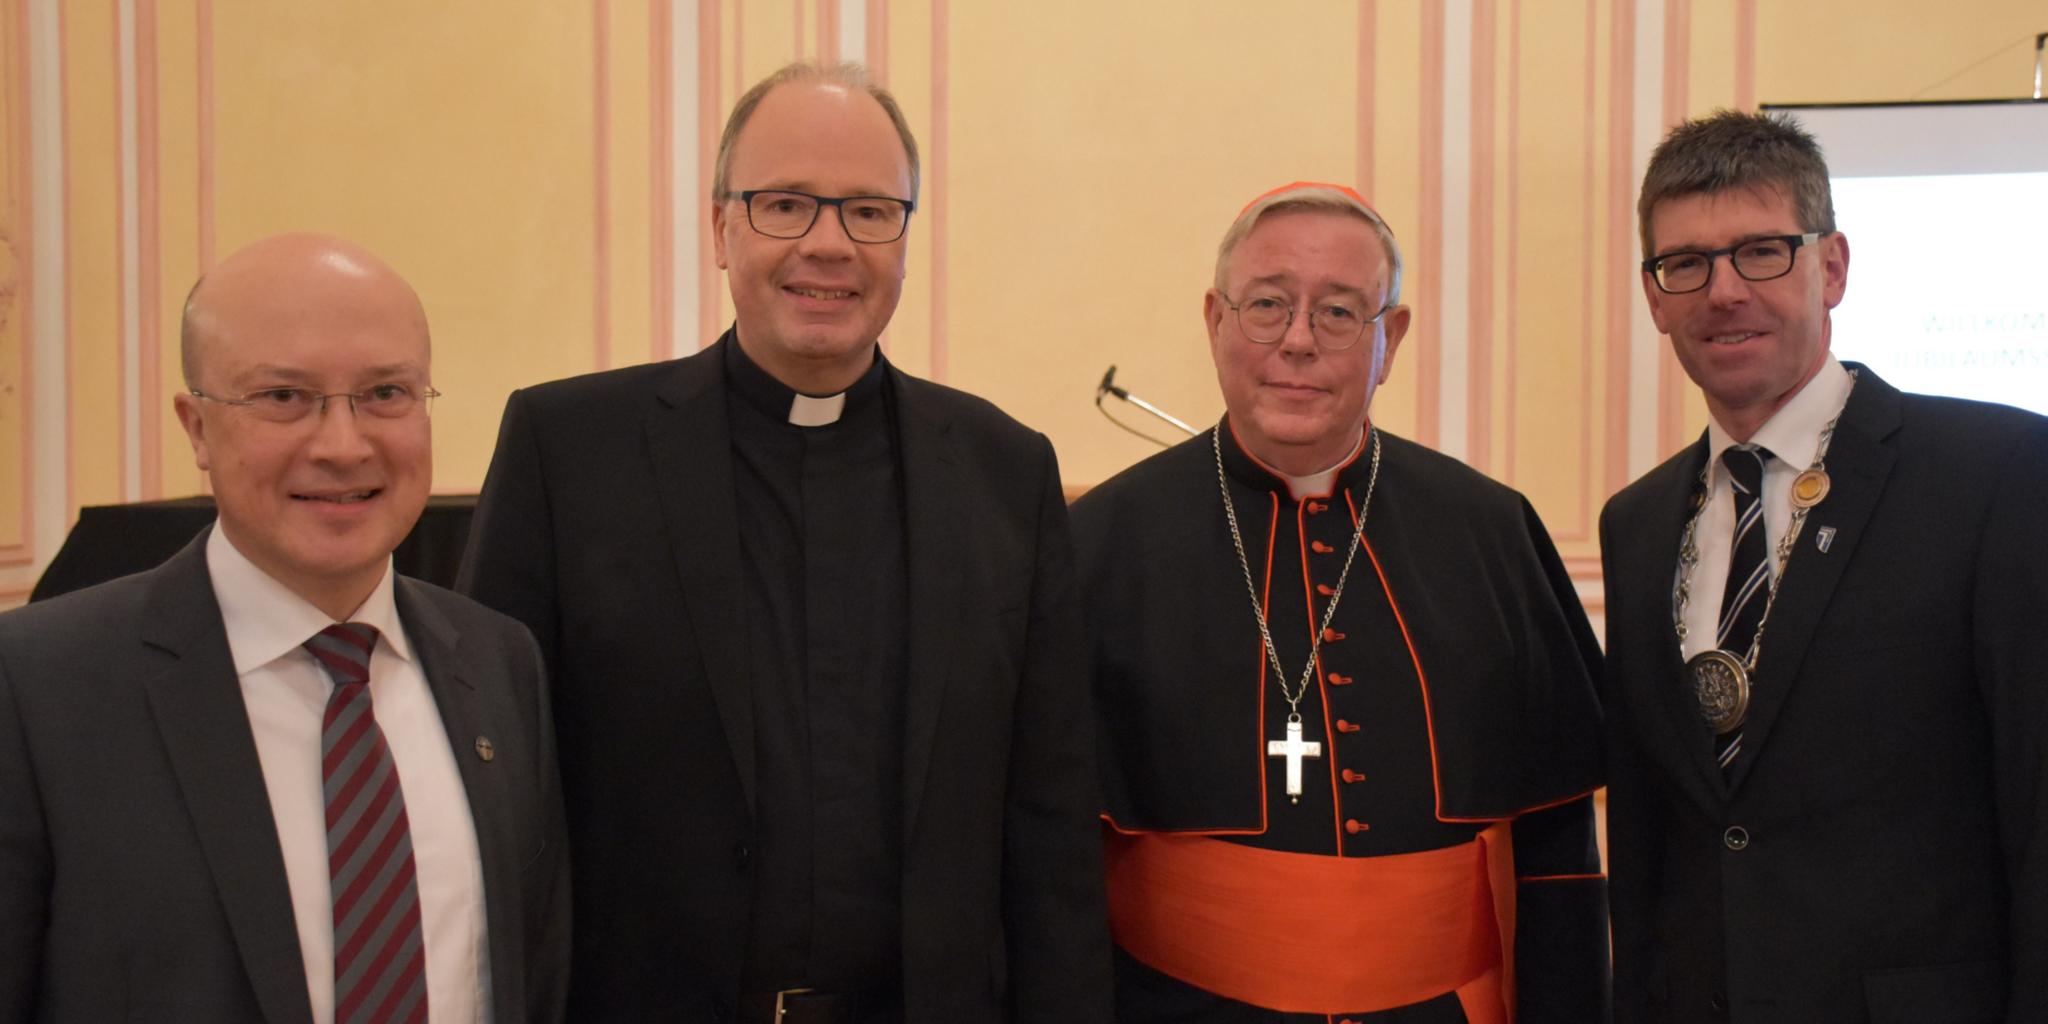 Professor Johannes Brantl, Bischof Dr. Stephan Ackermann, Kardinal Jean Claude Hollerich und Universitätspräsident Dr. Michael Jäckel (vlnr.)